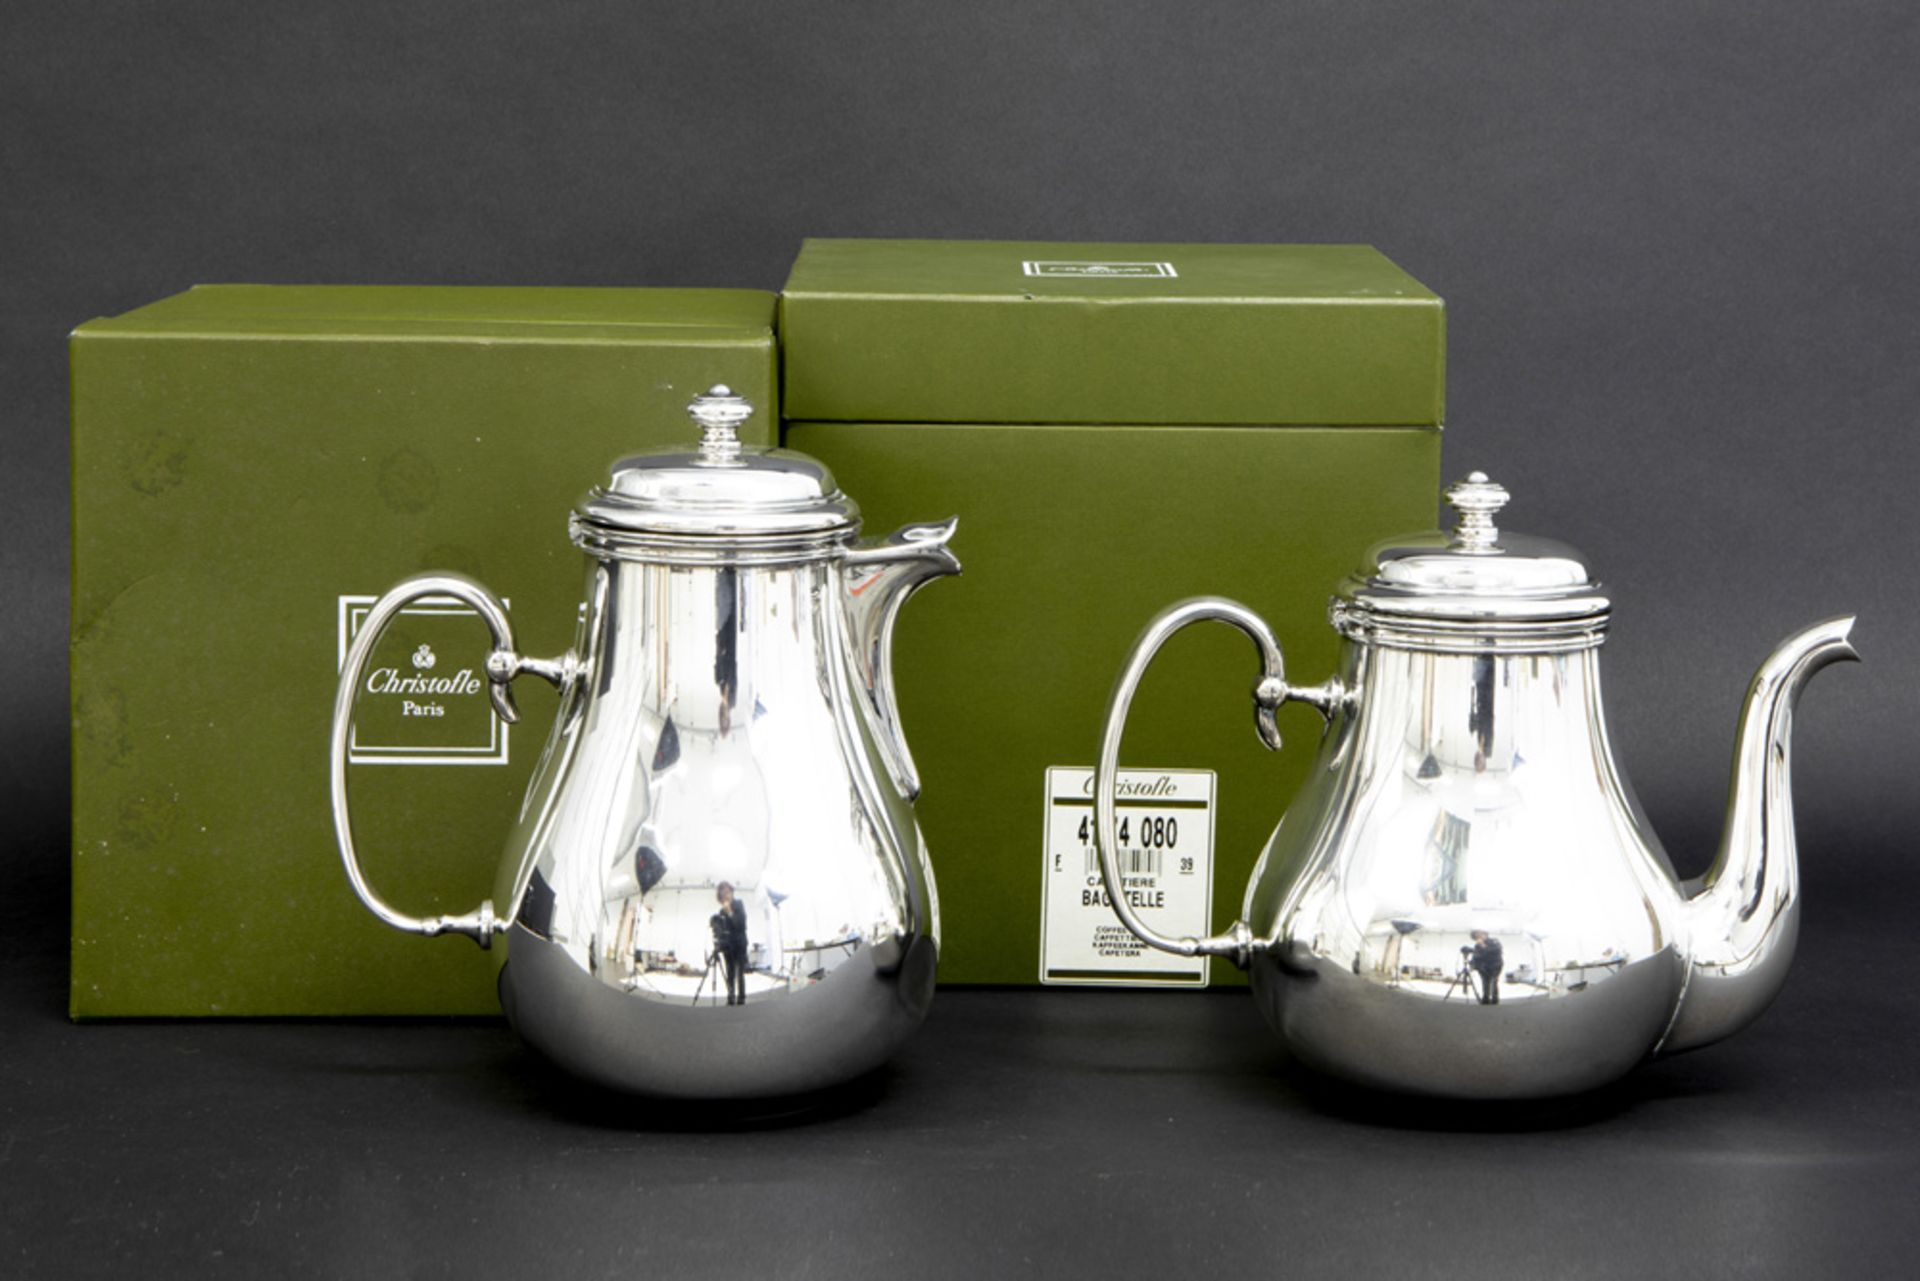 Christofle marked coffee and café-au-lait pot in their boxes || CHRISTOFLE lot (2) van een koffie- - Bild 2 aus 3